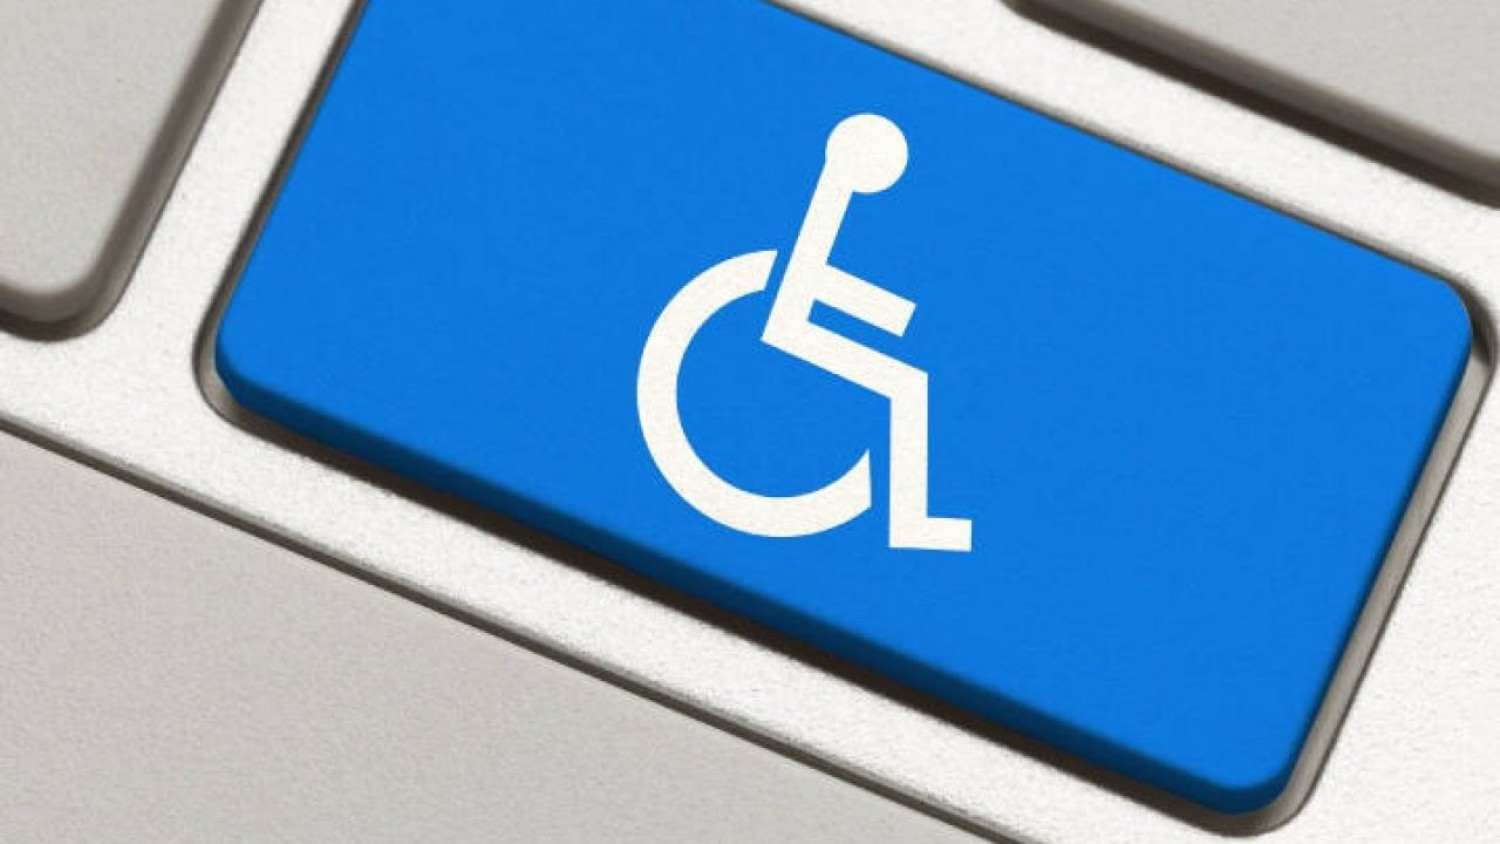 Featured image for “Παράταση μέχρι 30/4/2020 της αναβολής των συνεδριάσεων των Κ.Ε.Π.Α. για την εξέταση αιτήσεων πιστοποίησης αναπηρίας.”